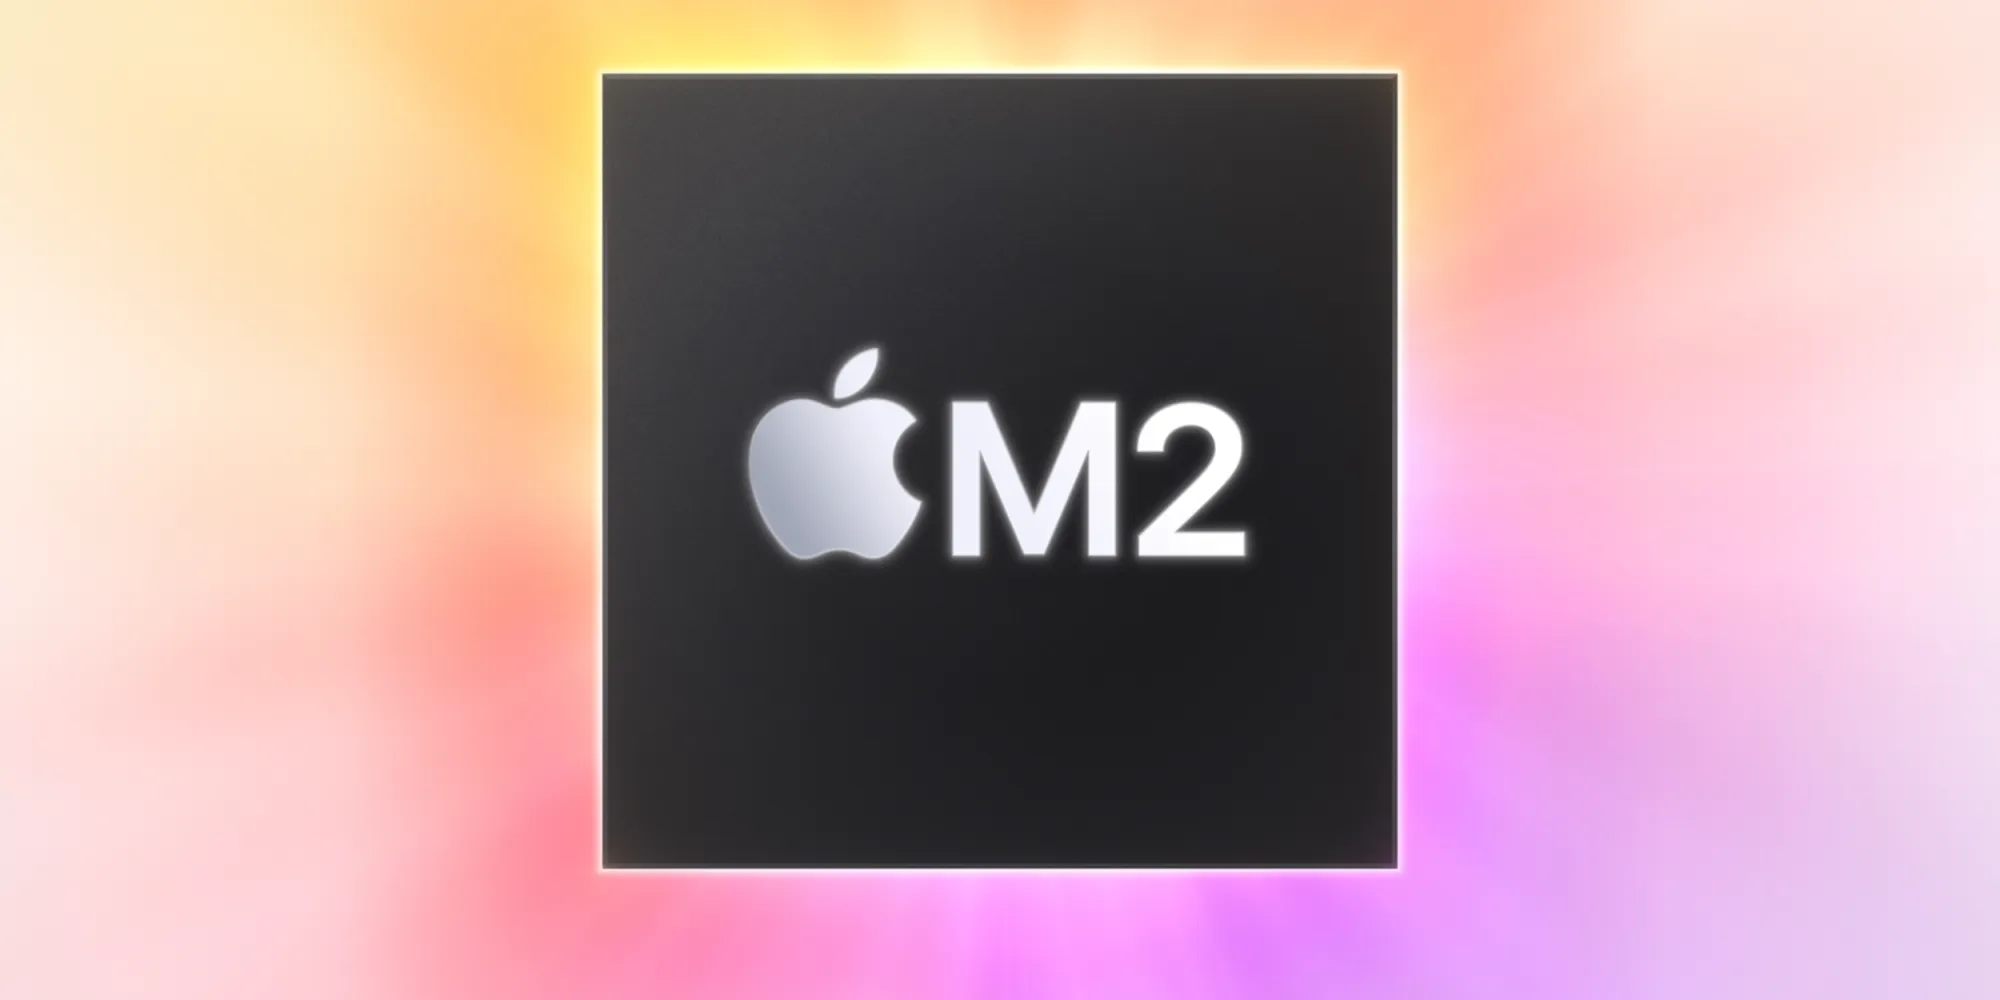 Apple chip M2 2022